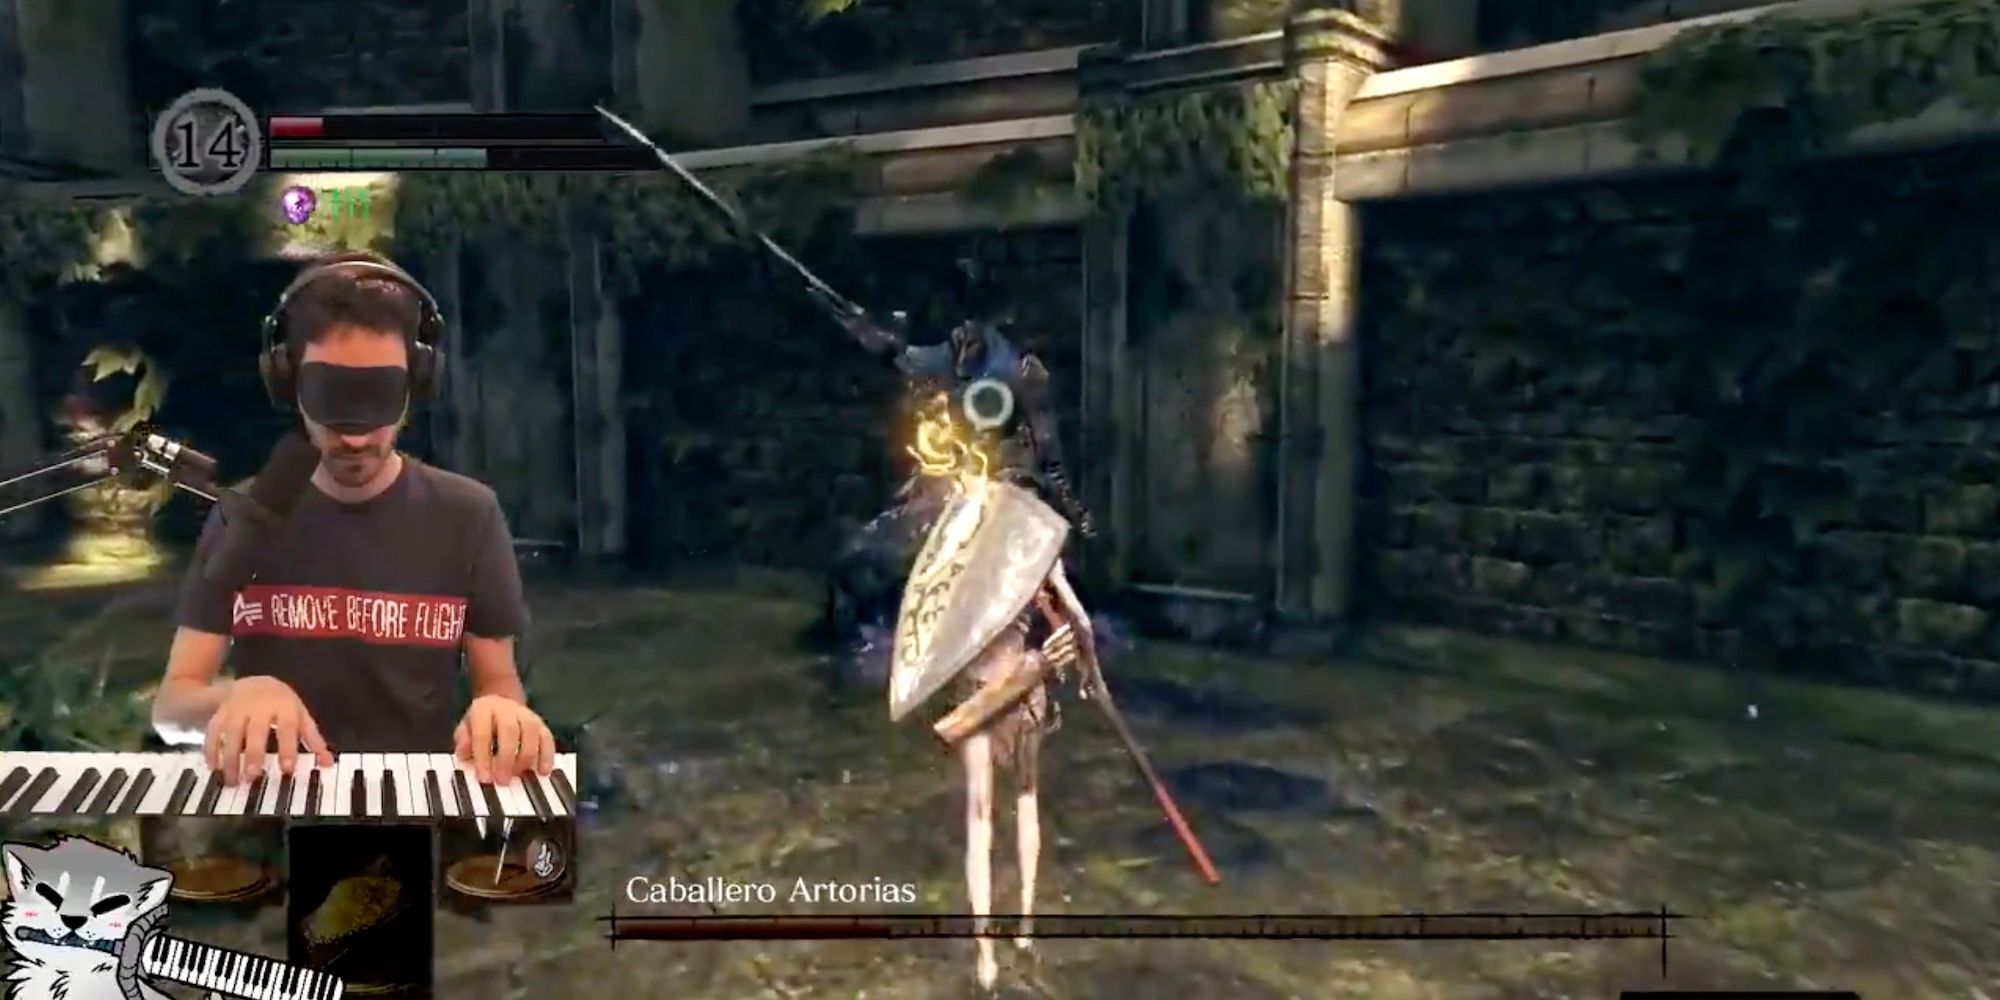 Streamer FryderykG defeats Dark Souls boss blindfolded